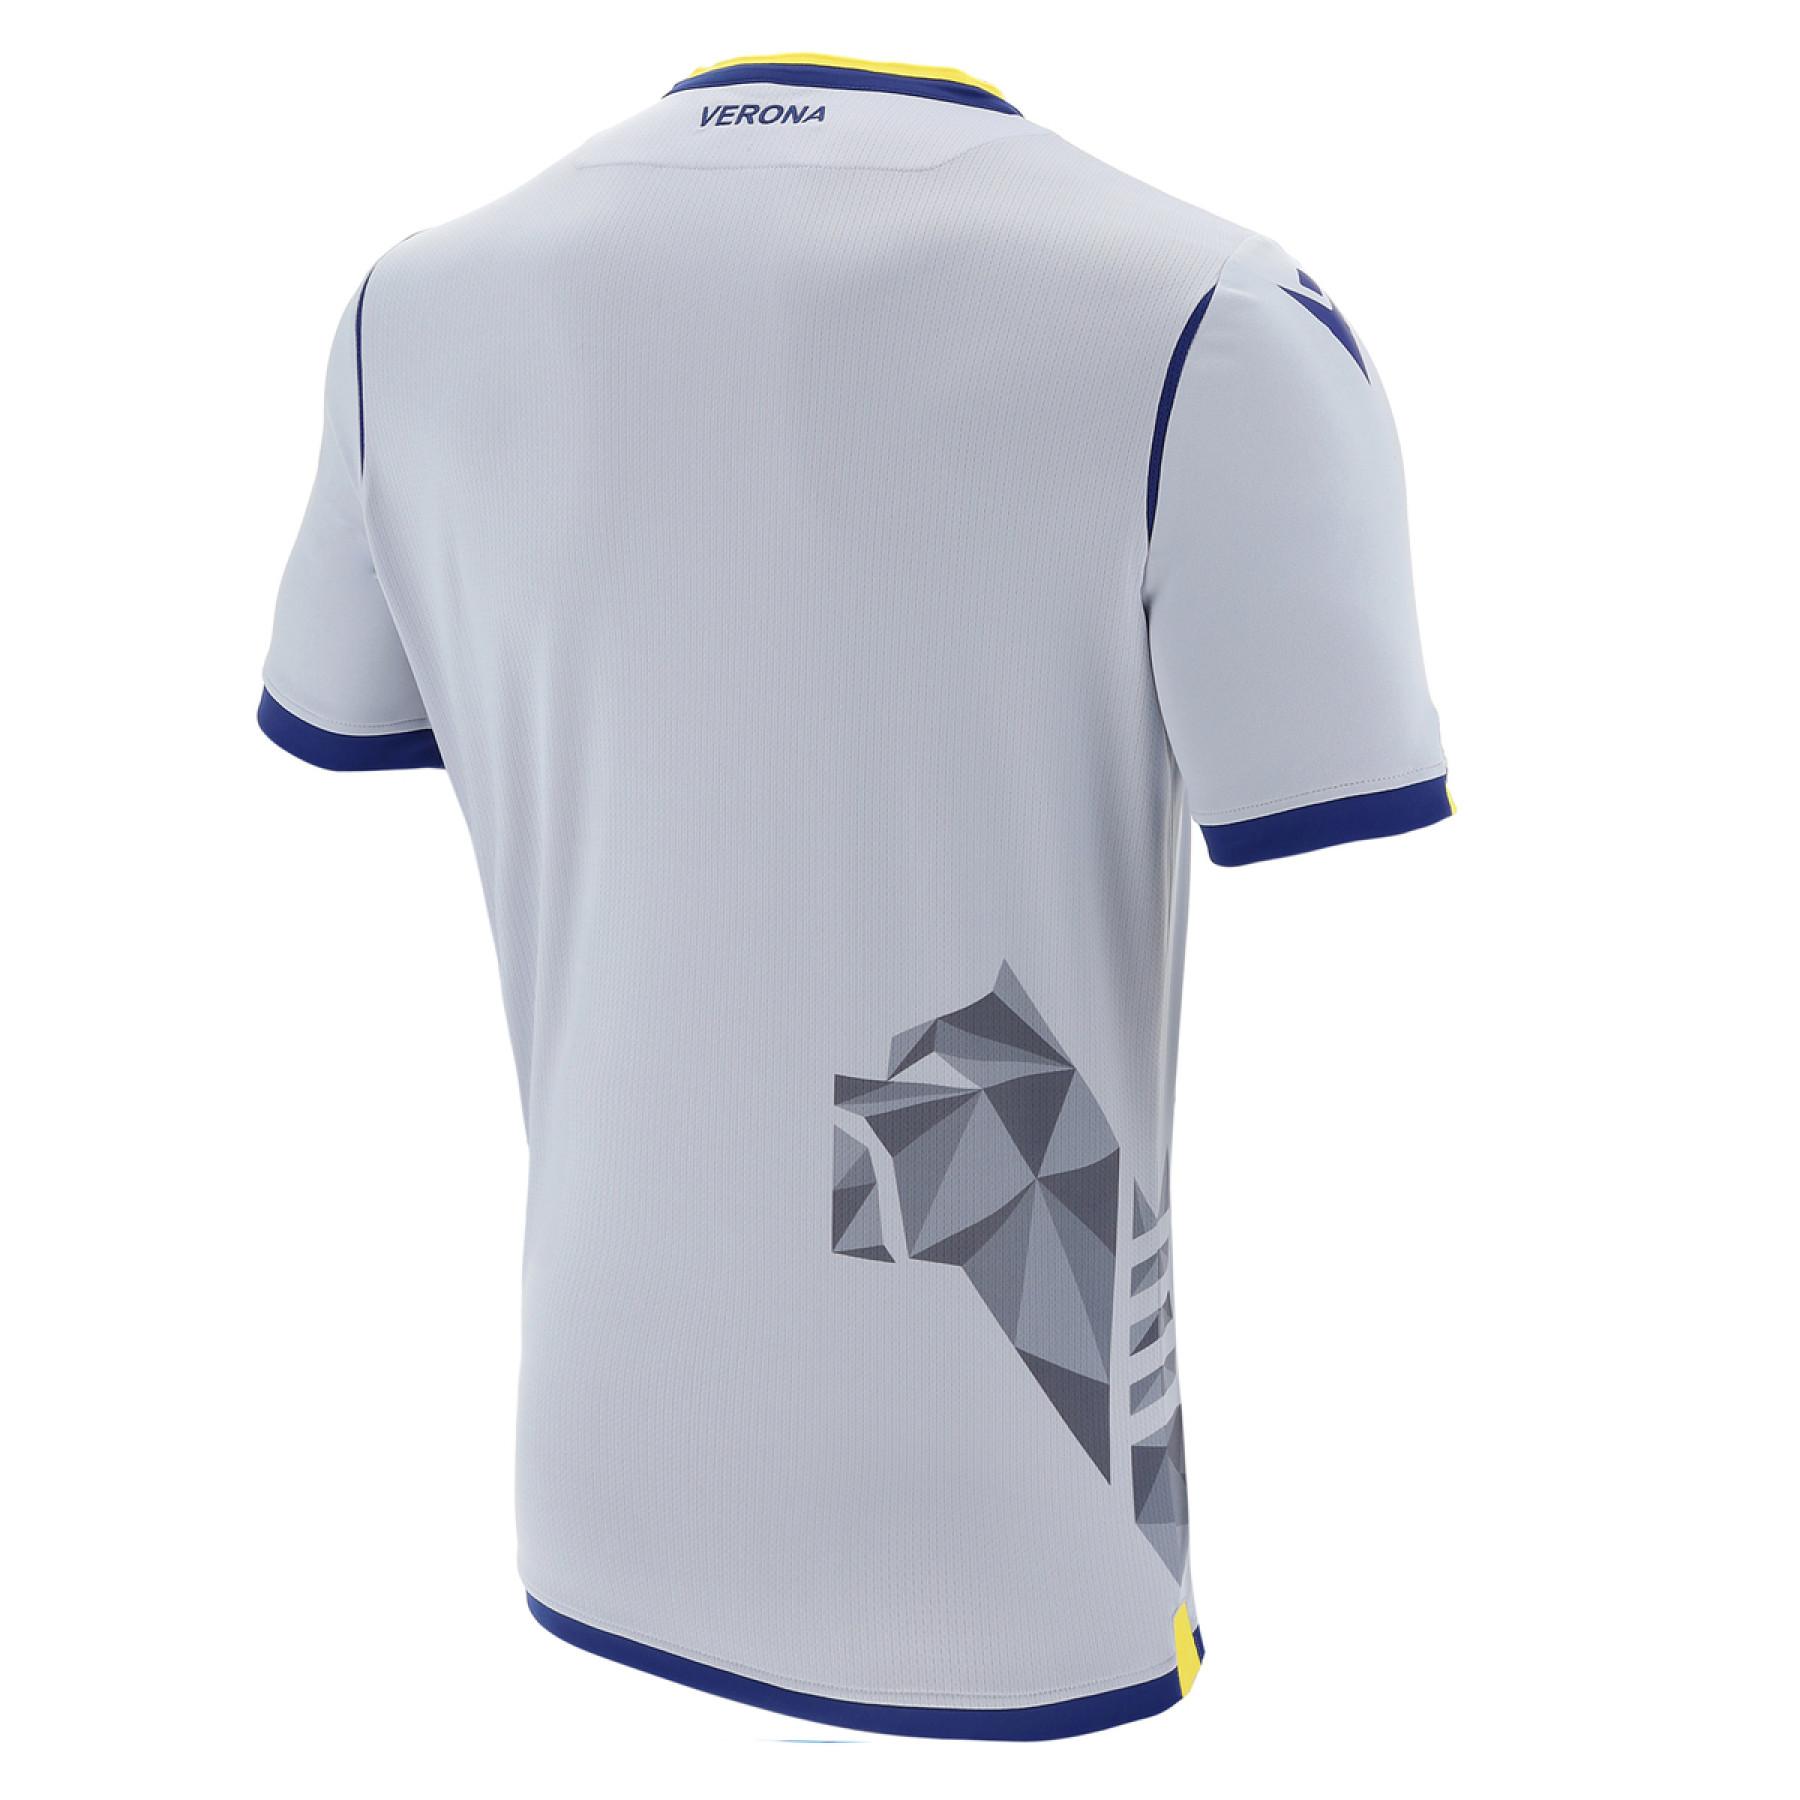 Trzecia koszulka Hellas Vérone fc 2020/21